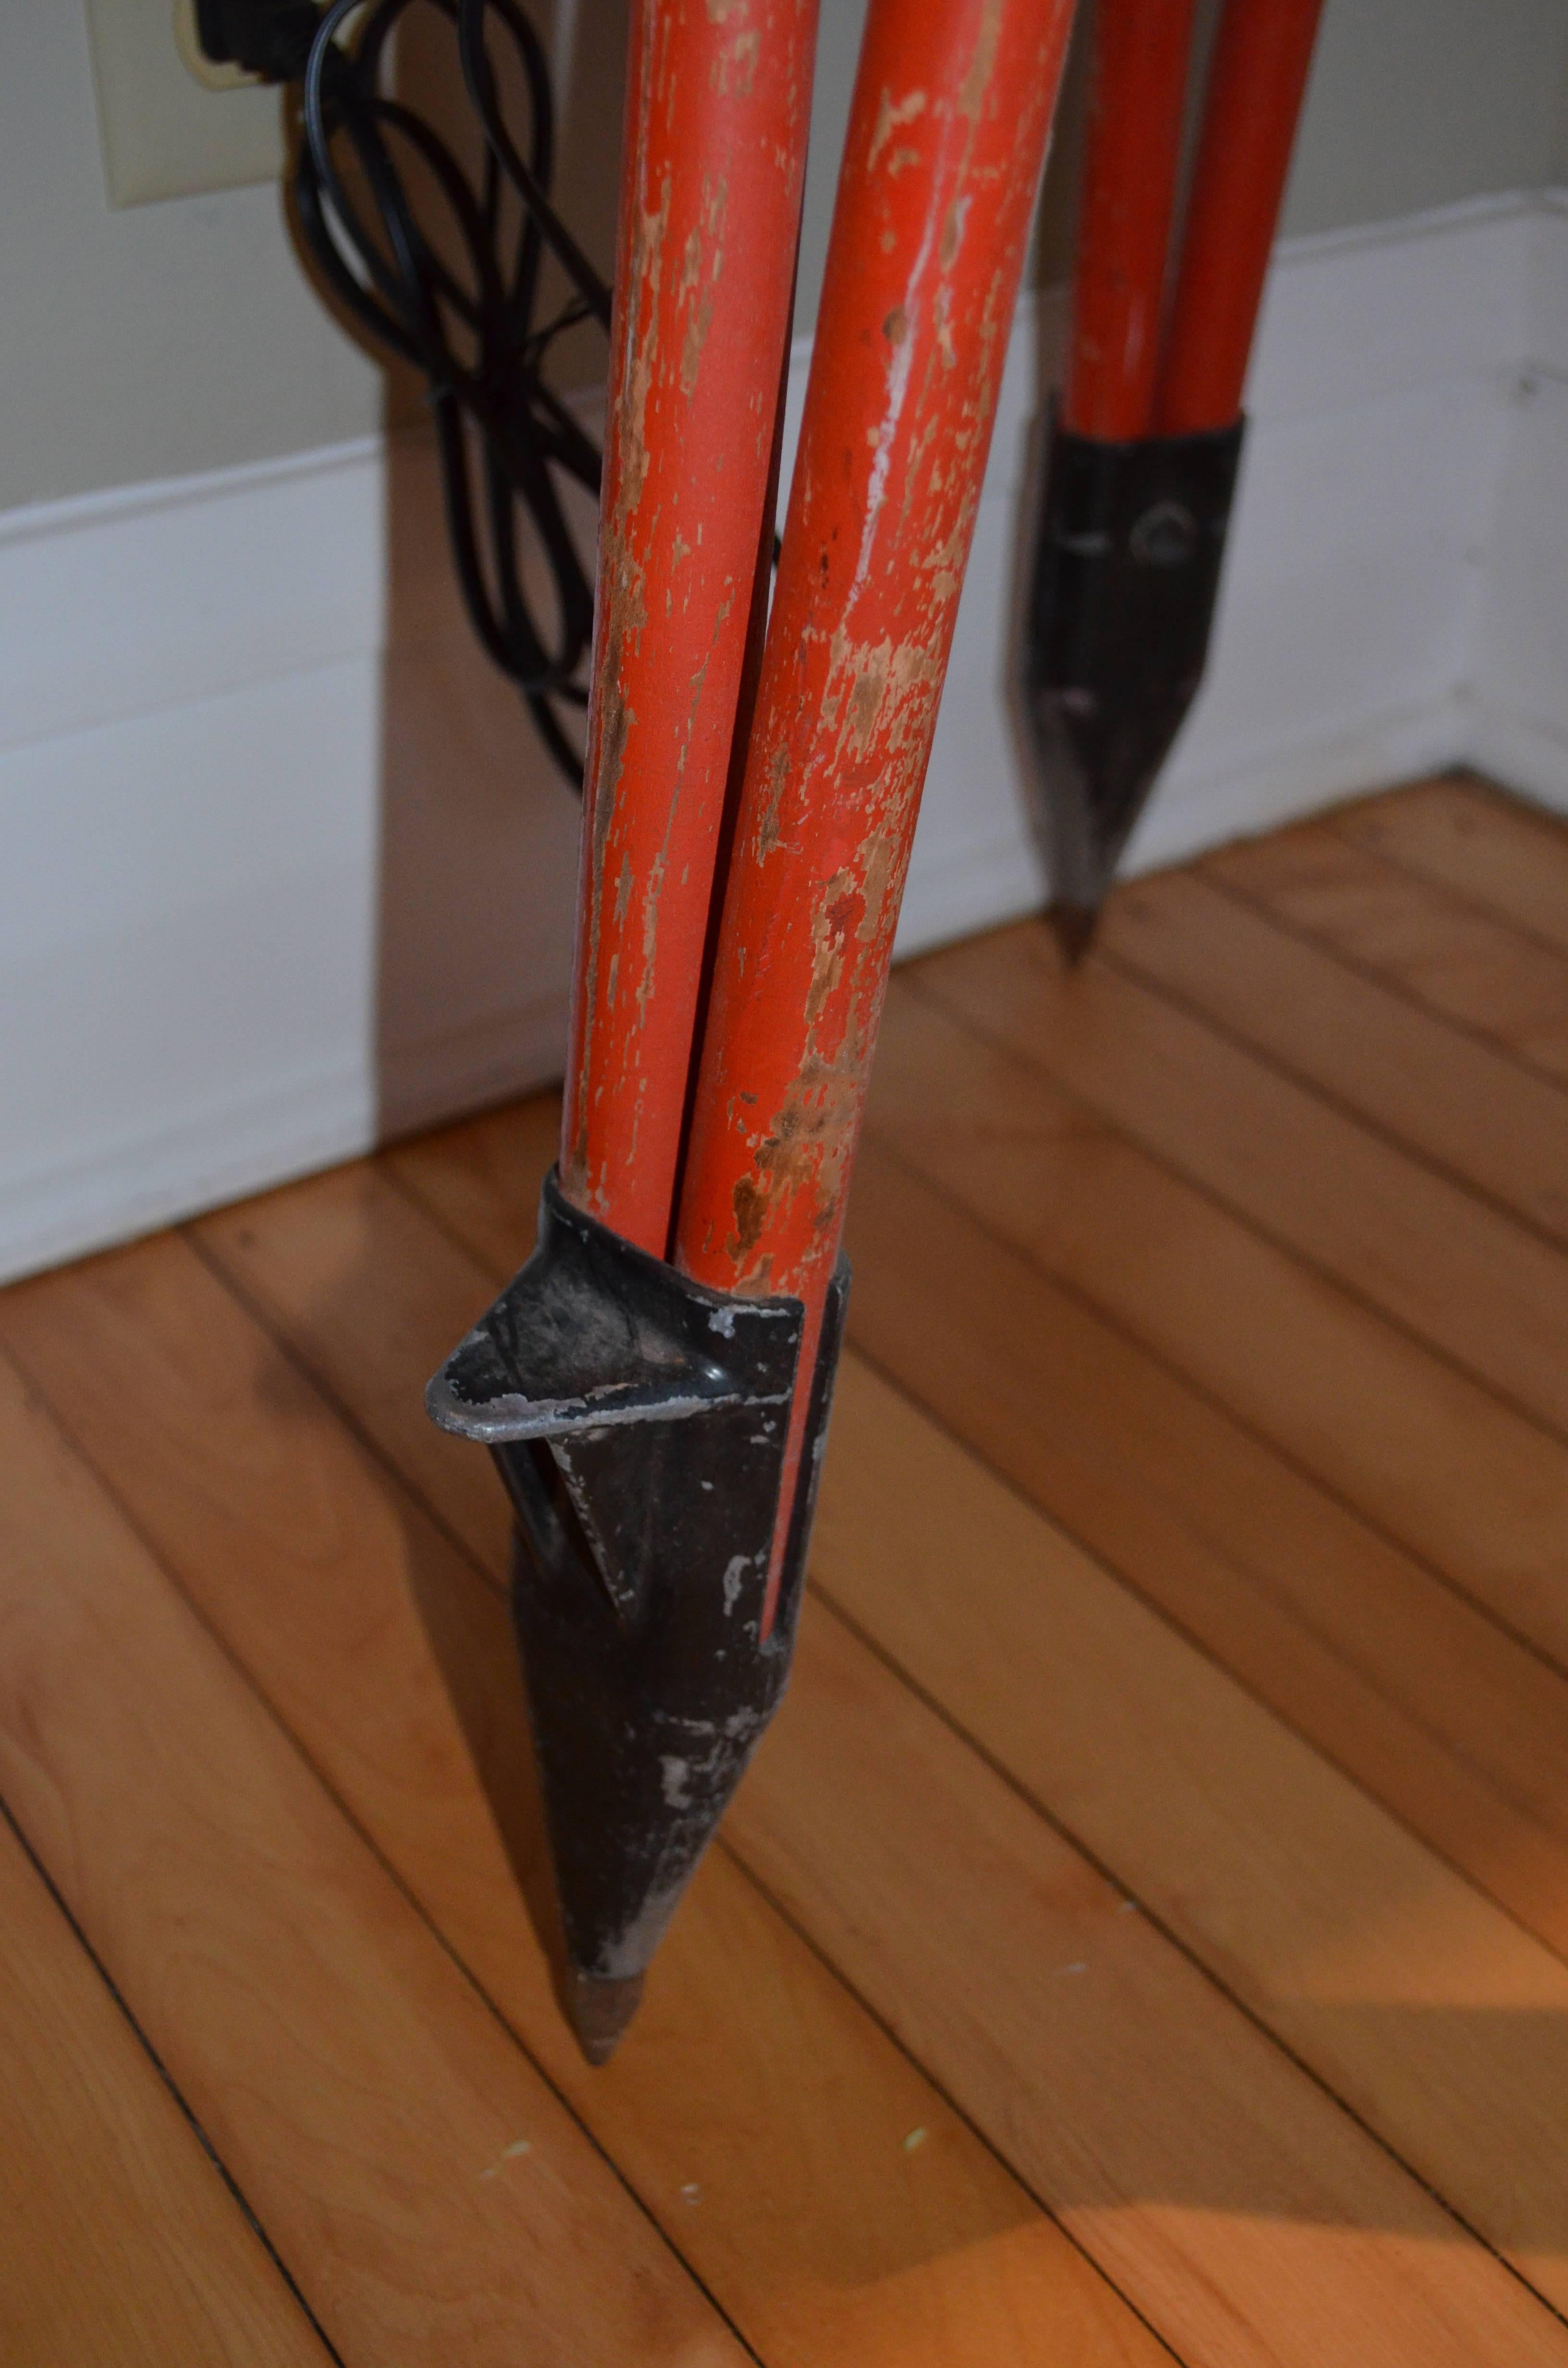 Steel Floor Lamp Created from Surveyor Tripod in as-found Orange Paint